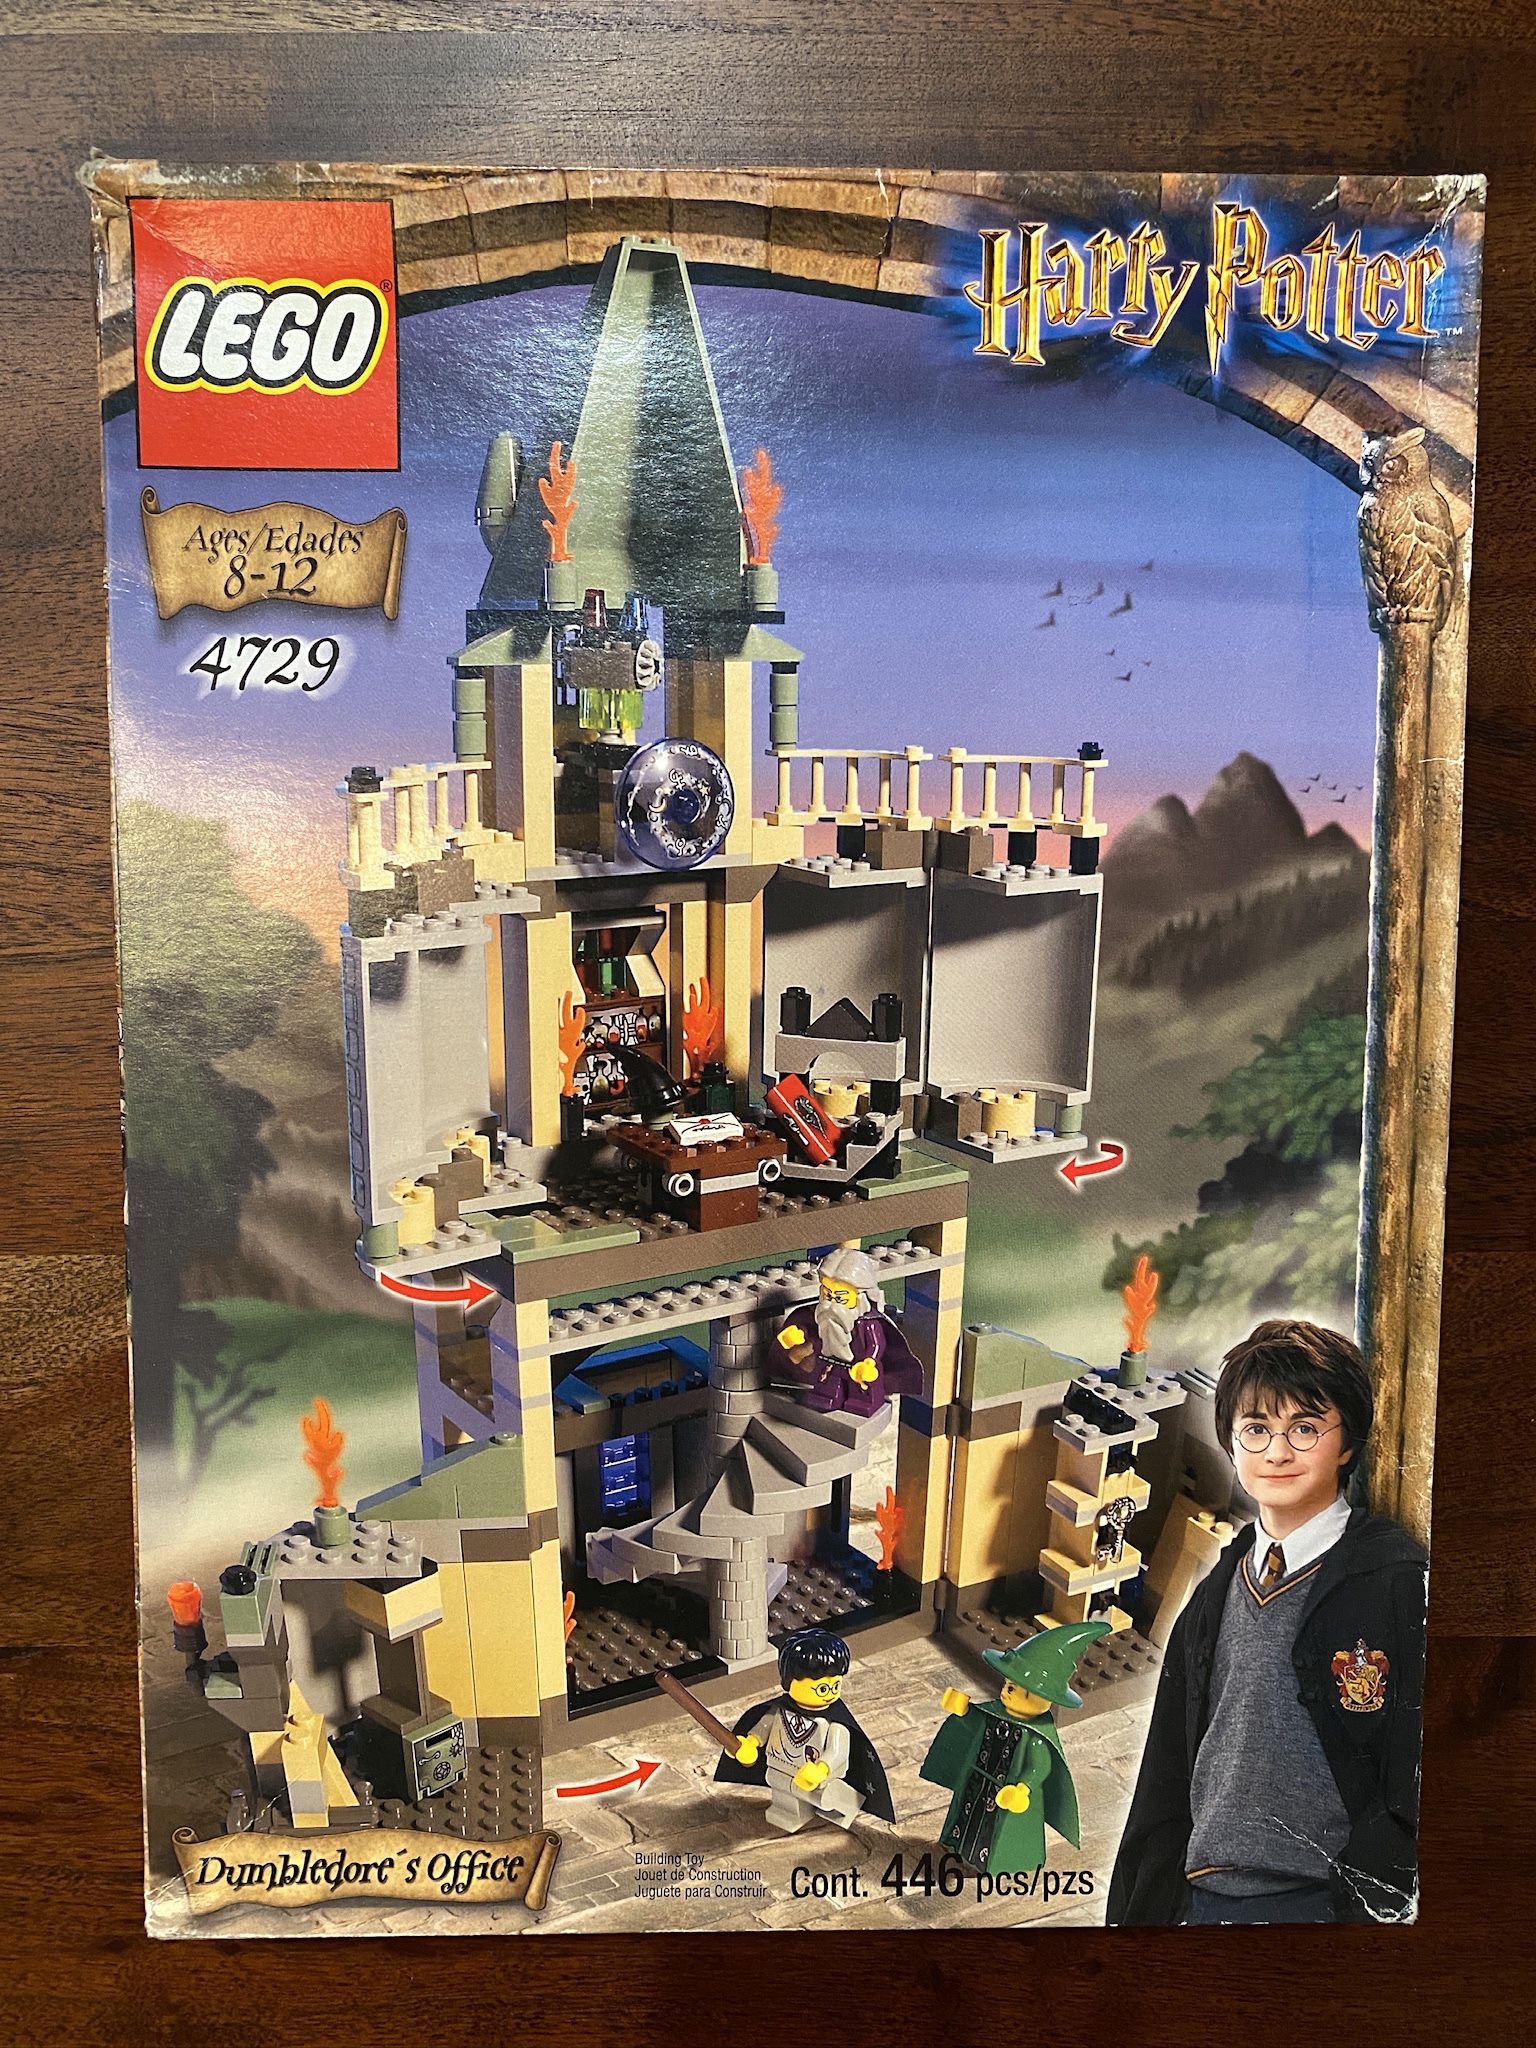 LEGO 2002 Harry Potter Dumbledore’s Office 4729 RETIRED Set Brand New